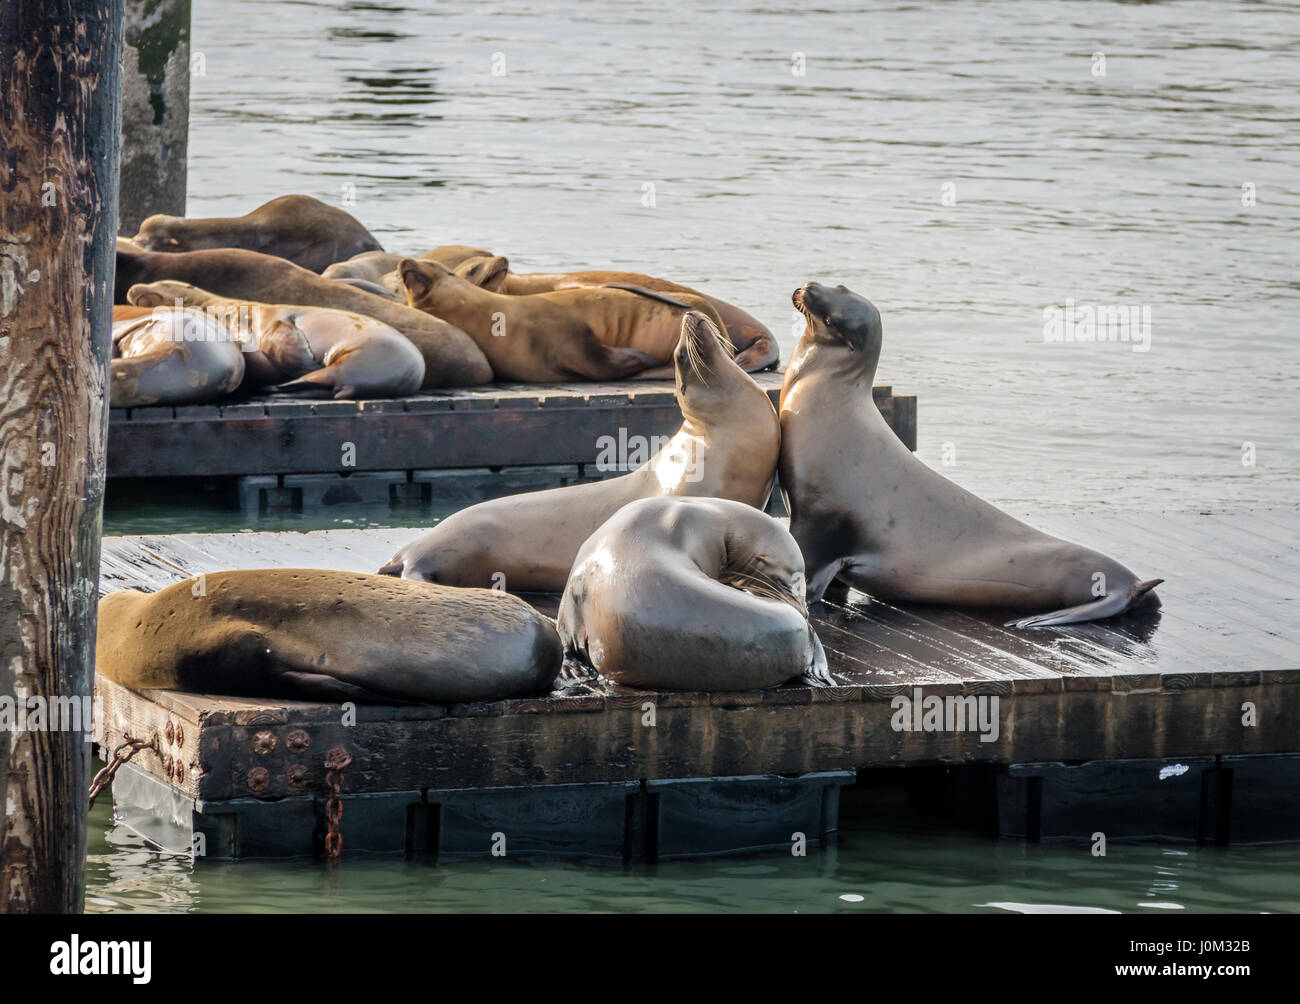 Sea Lions of Pier 39 at Fishermans Wharf - San Francisco, California, USA Stock Photo